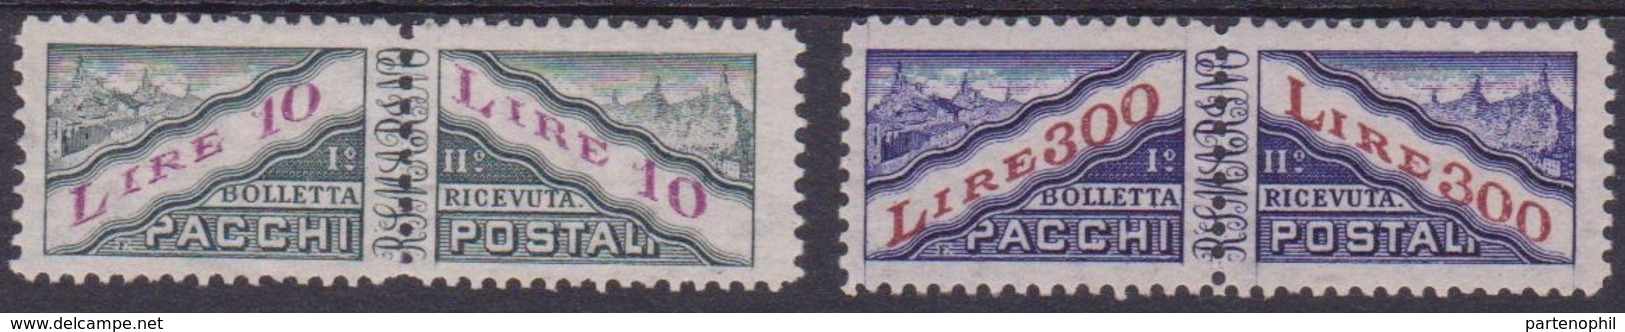 San Marino 1953 - Pacchi Postali N.35/35 Lire 10 + Lire 300 MNH - Cert. Bolaffi - Paquetes Postales